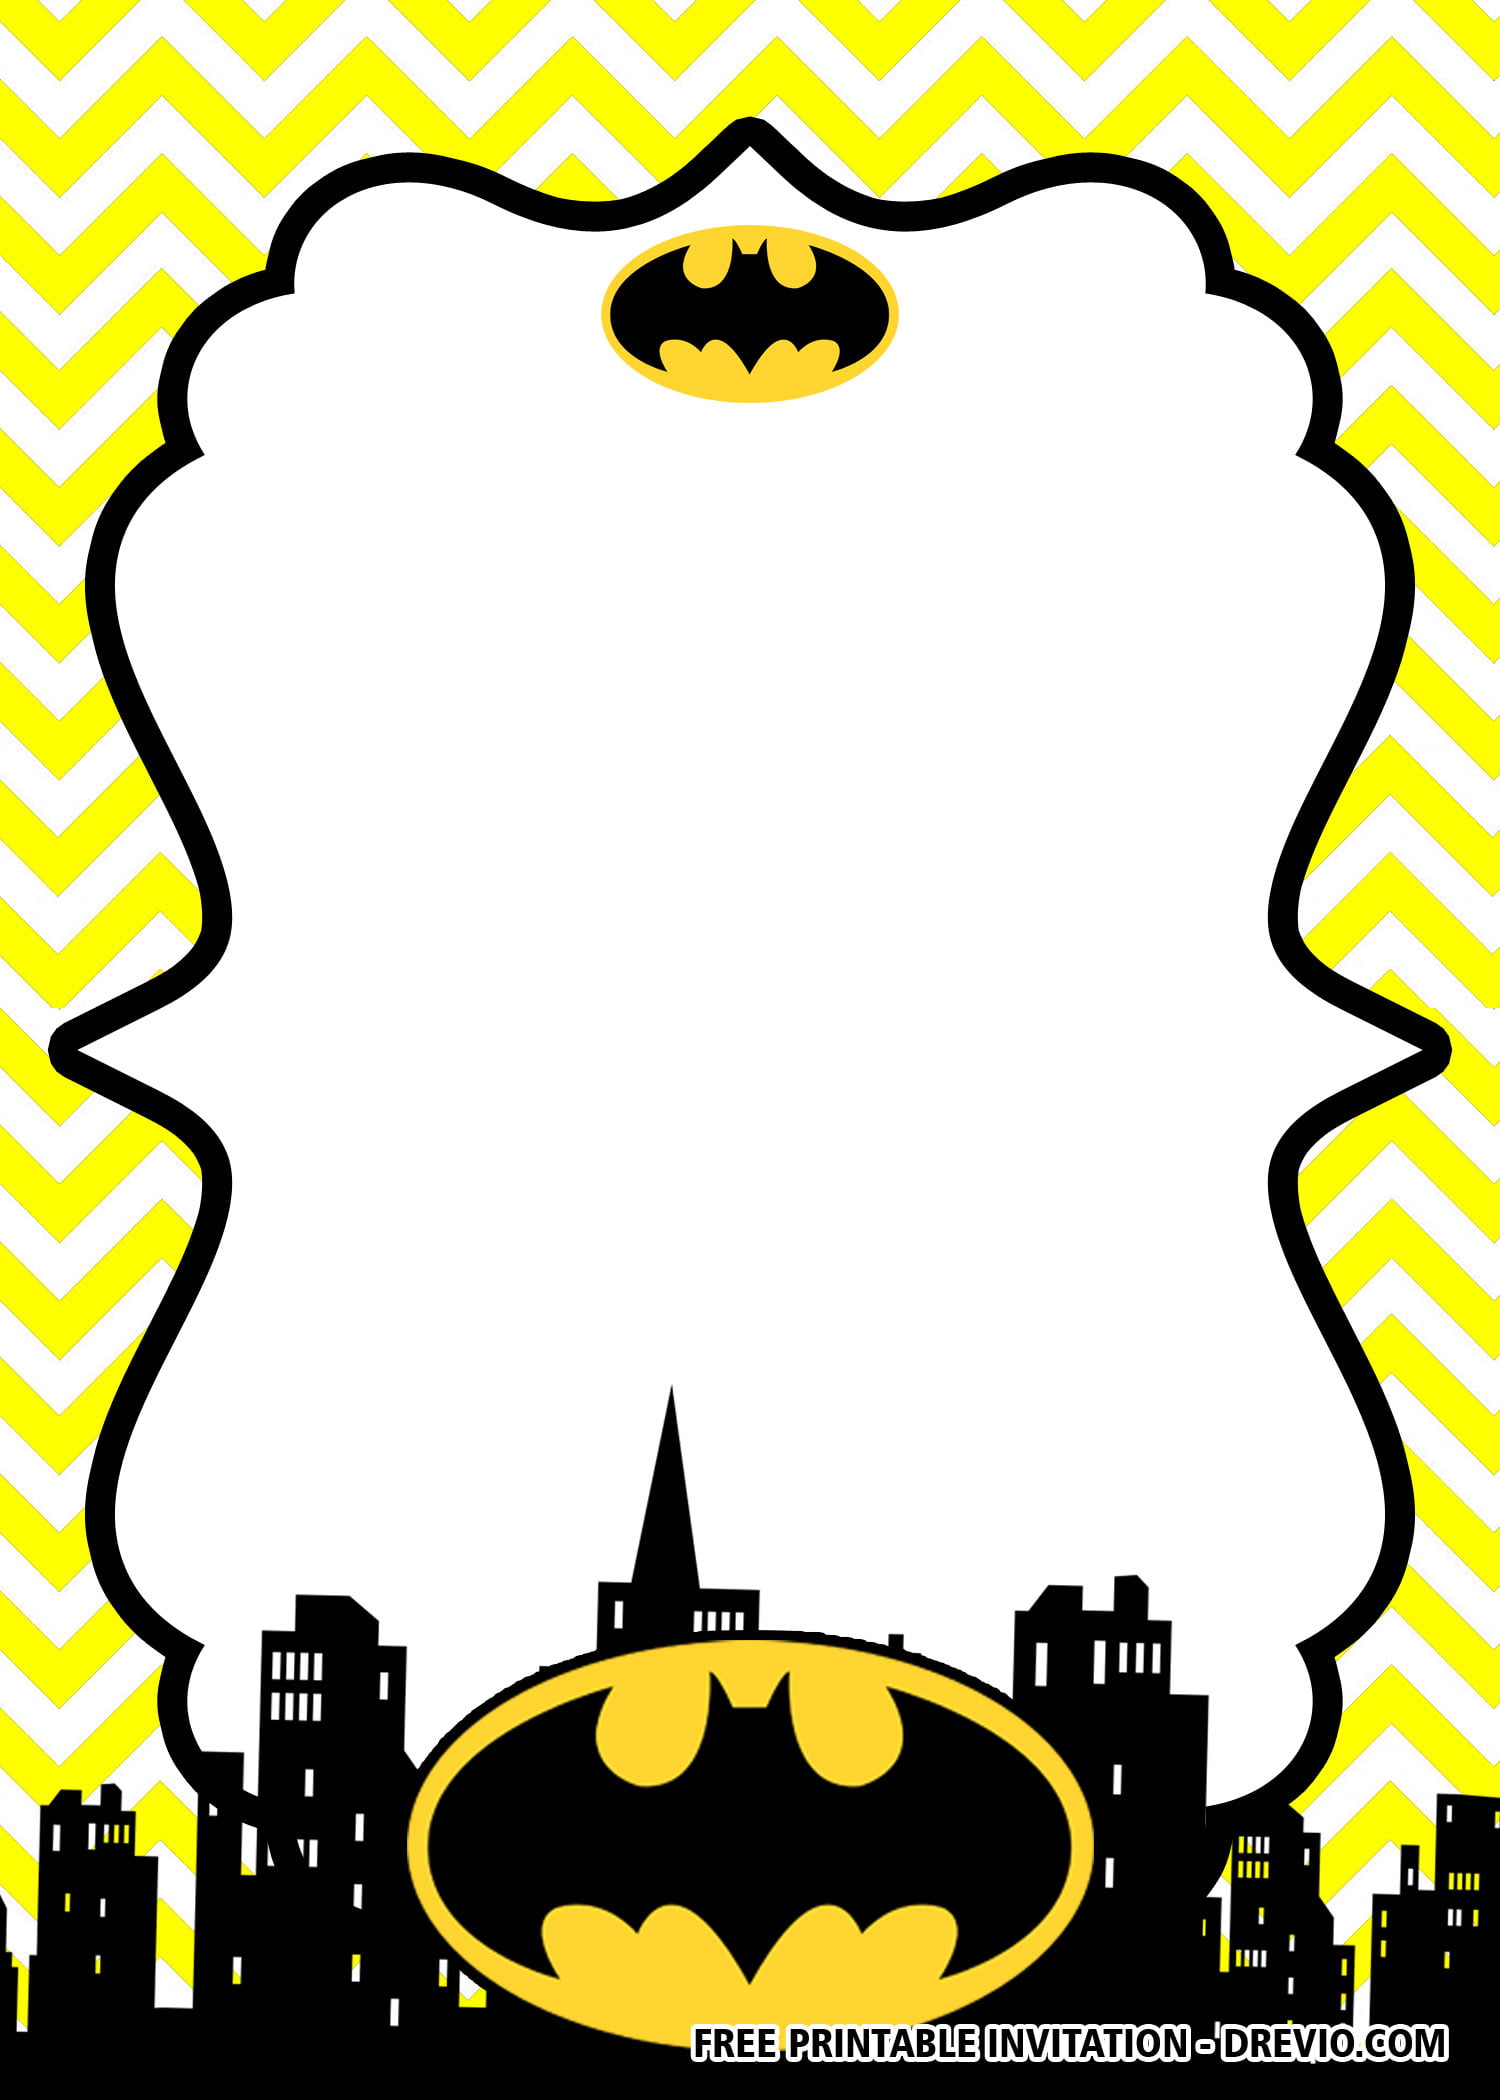 Free Printable Batman Invitation Template Printable Templates